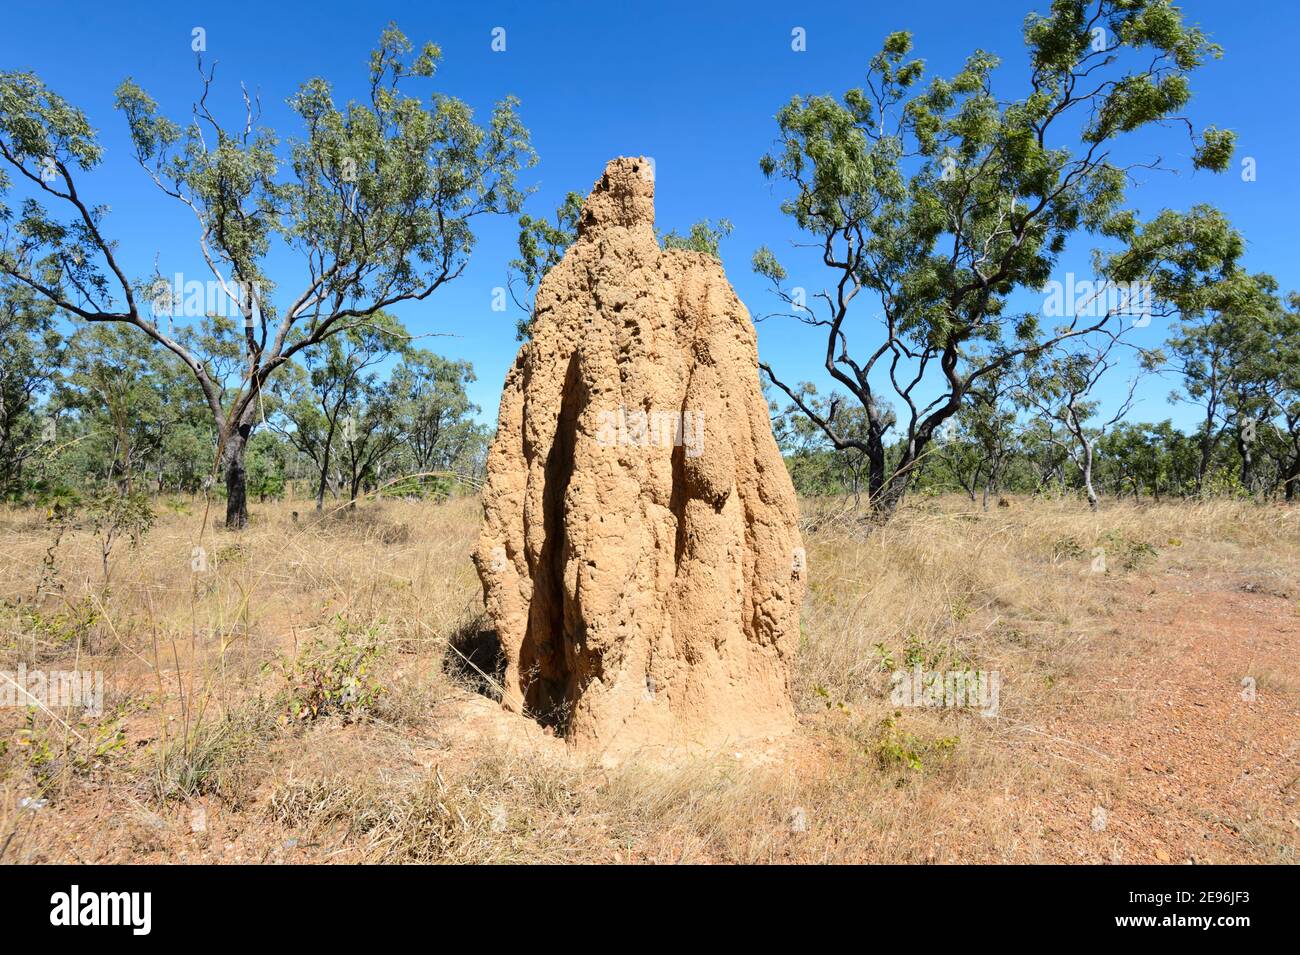 Tall Termite mound in the savannah, Northern Territory, NT, Australia Stock Photo